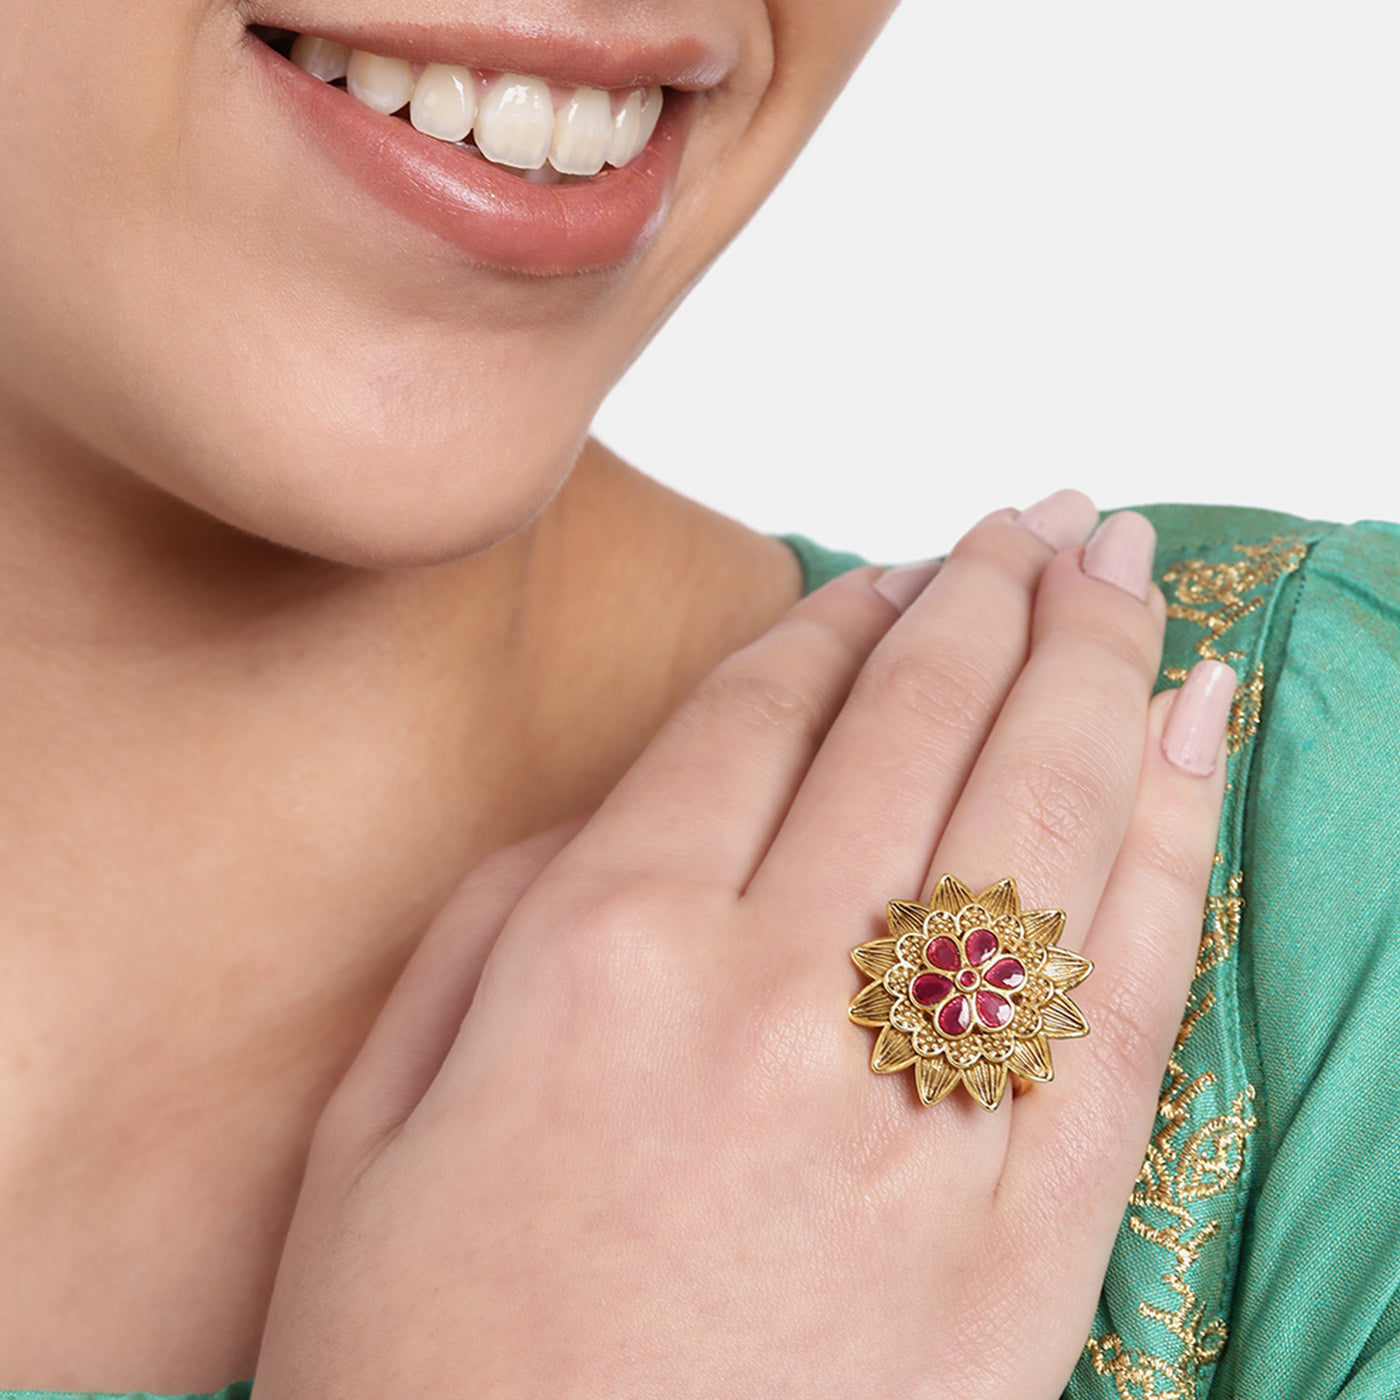 Estele Gold Plated Flower Designer Matt Finish Finger Ring with Ruby Crystals for Women(Adjustable)